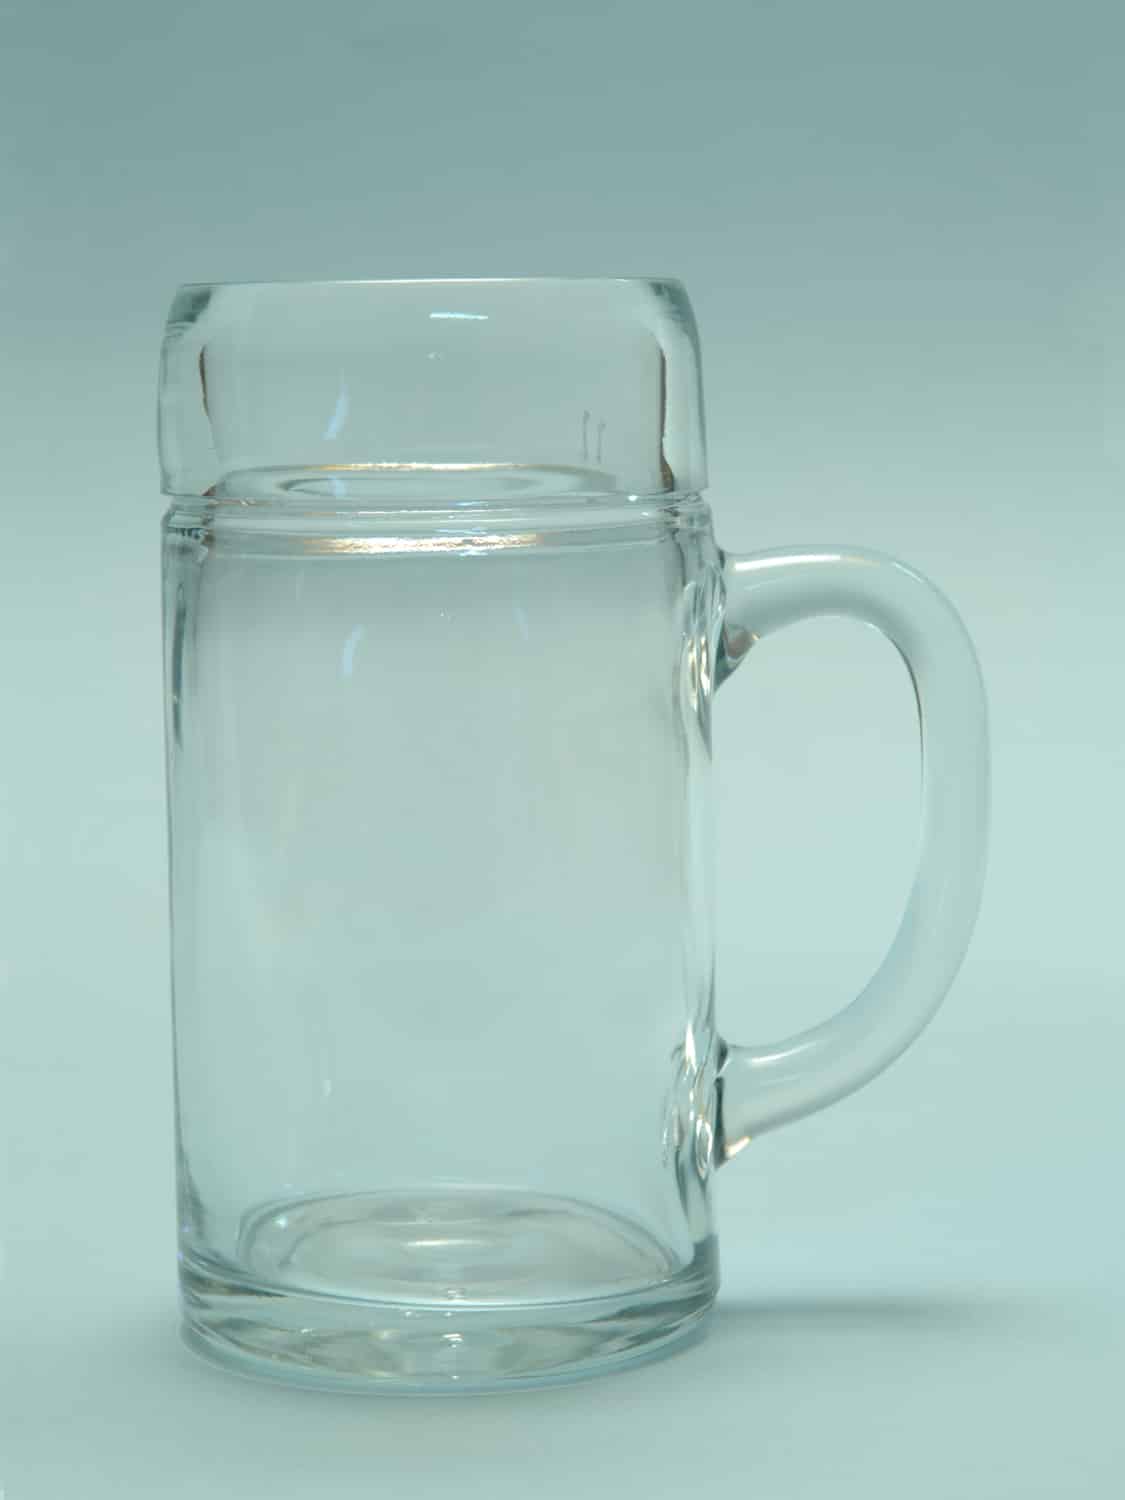 Sugar glass water jug / beer stein mug 1L smooth. Height x Width: 20 x 10.5 cm.